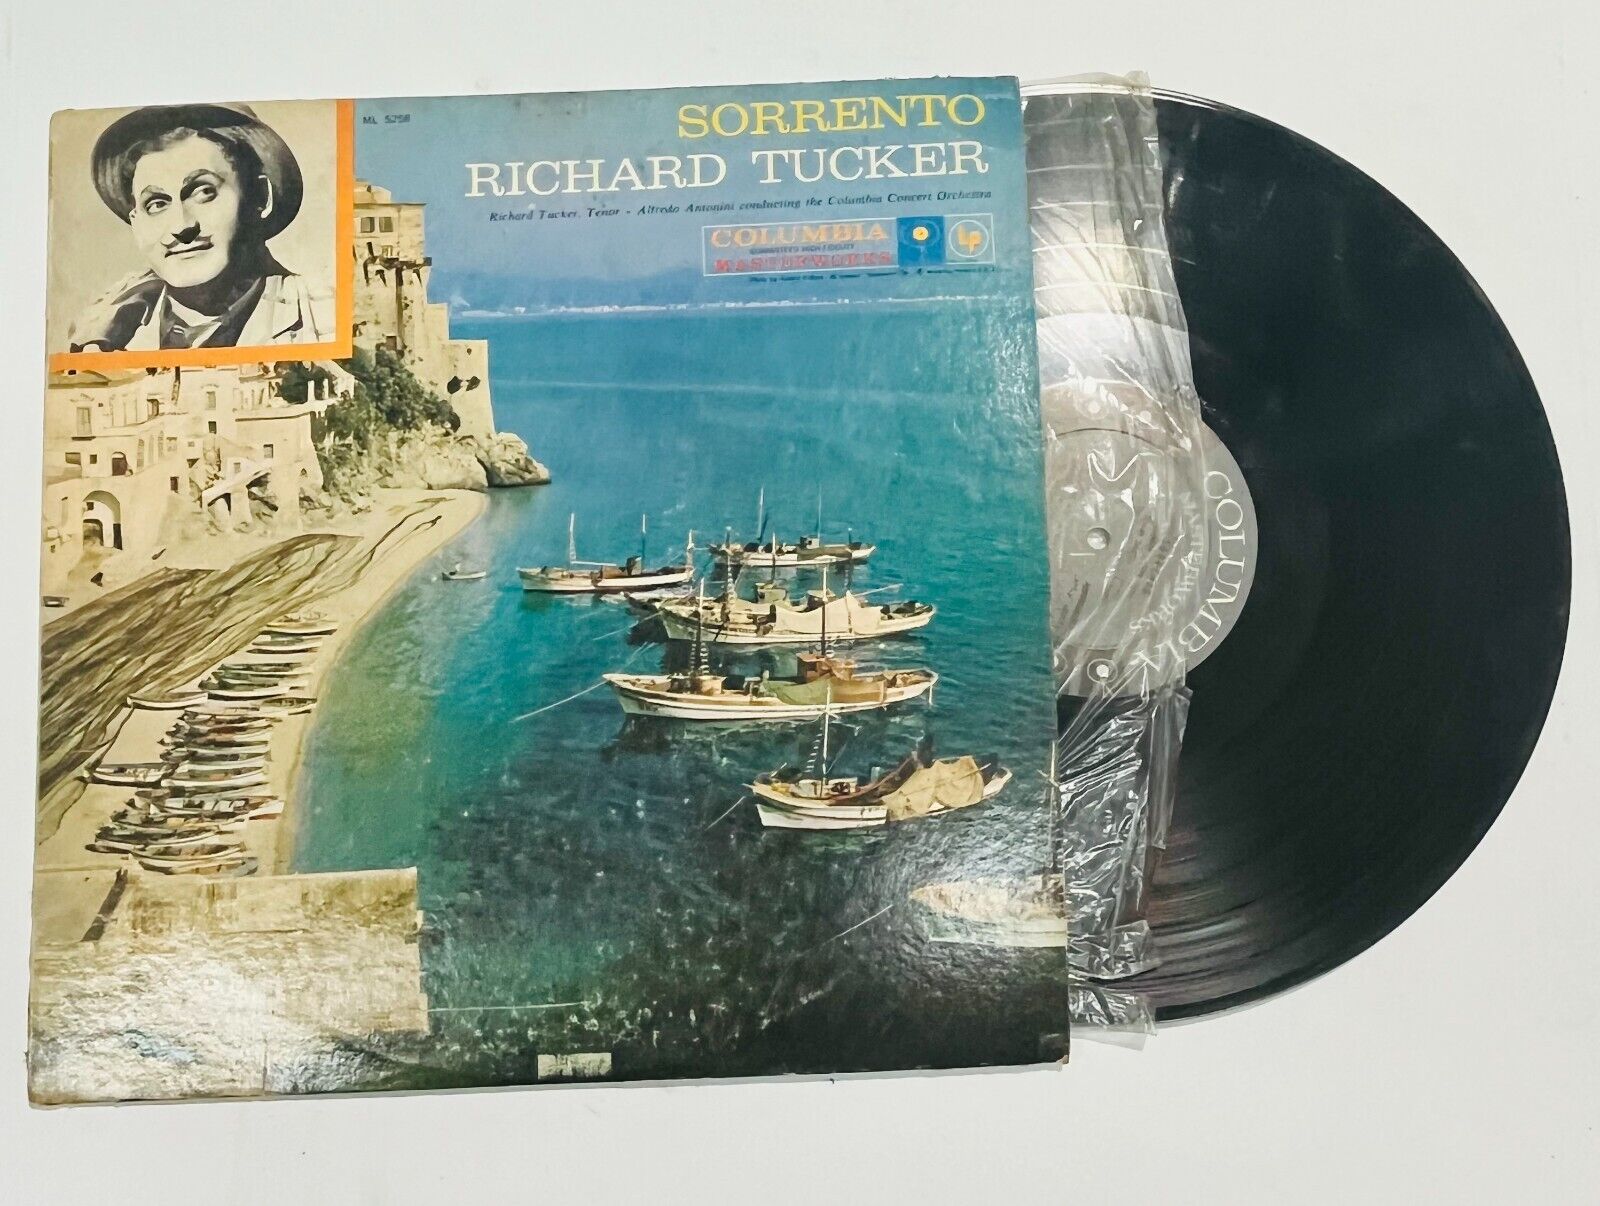 Richard Tucker - Sorrento LP Columbia Vinyl Record Album ML 4258 EXCELLENT